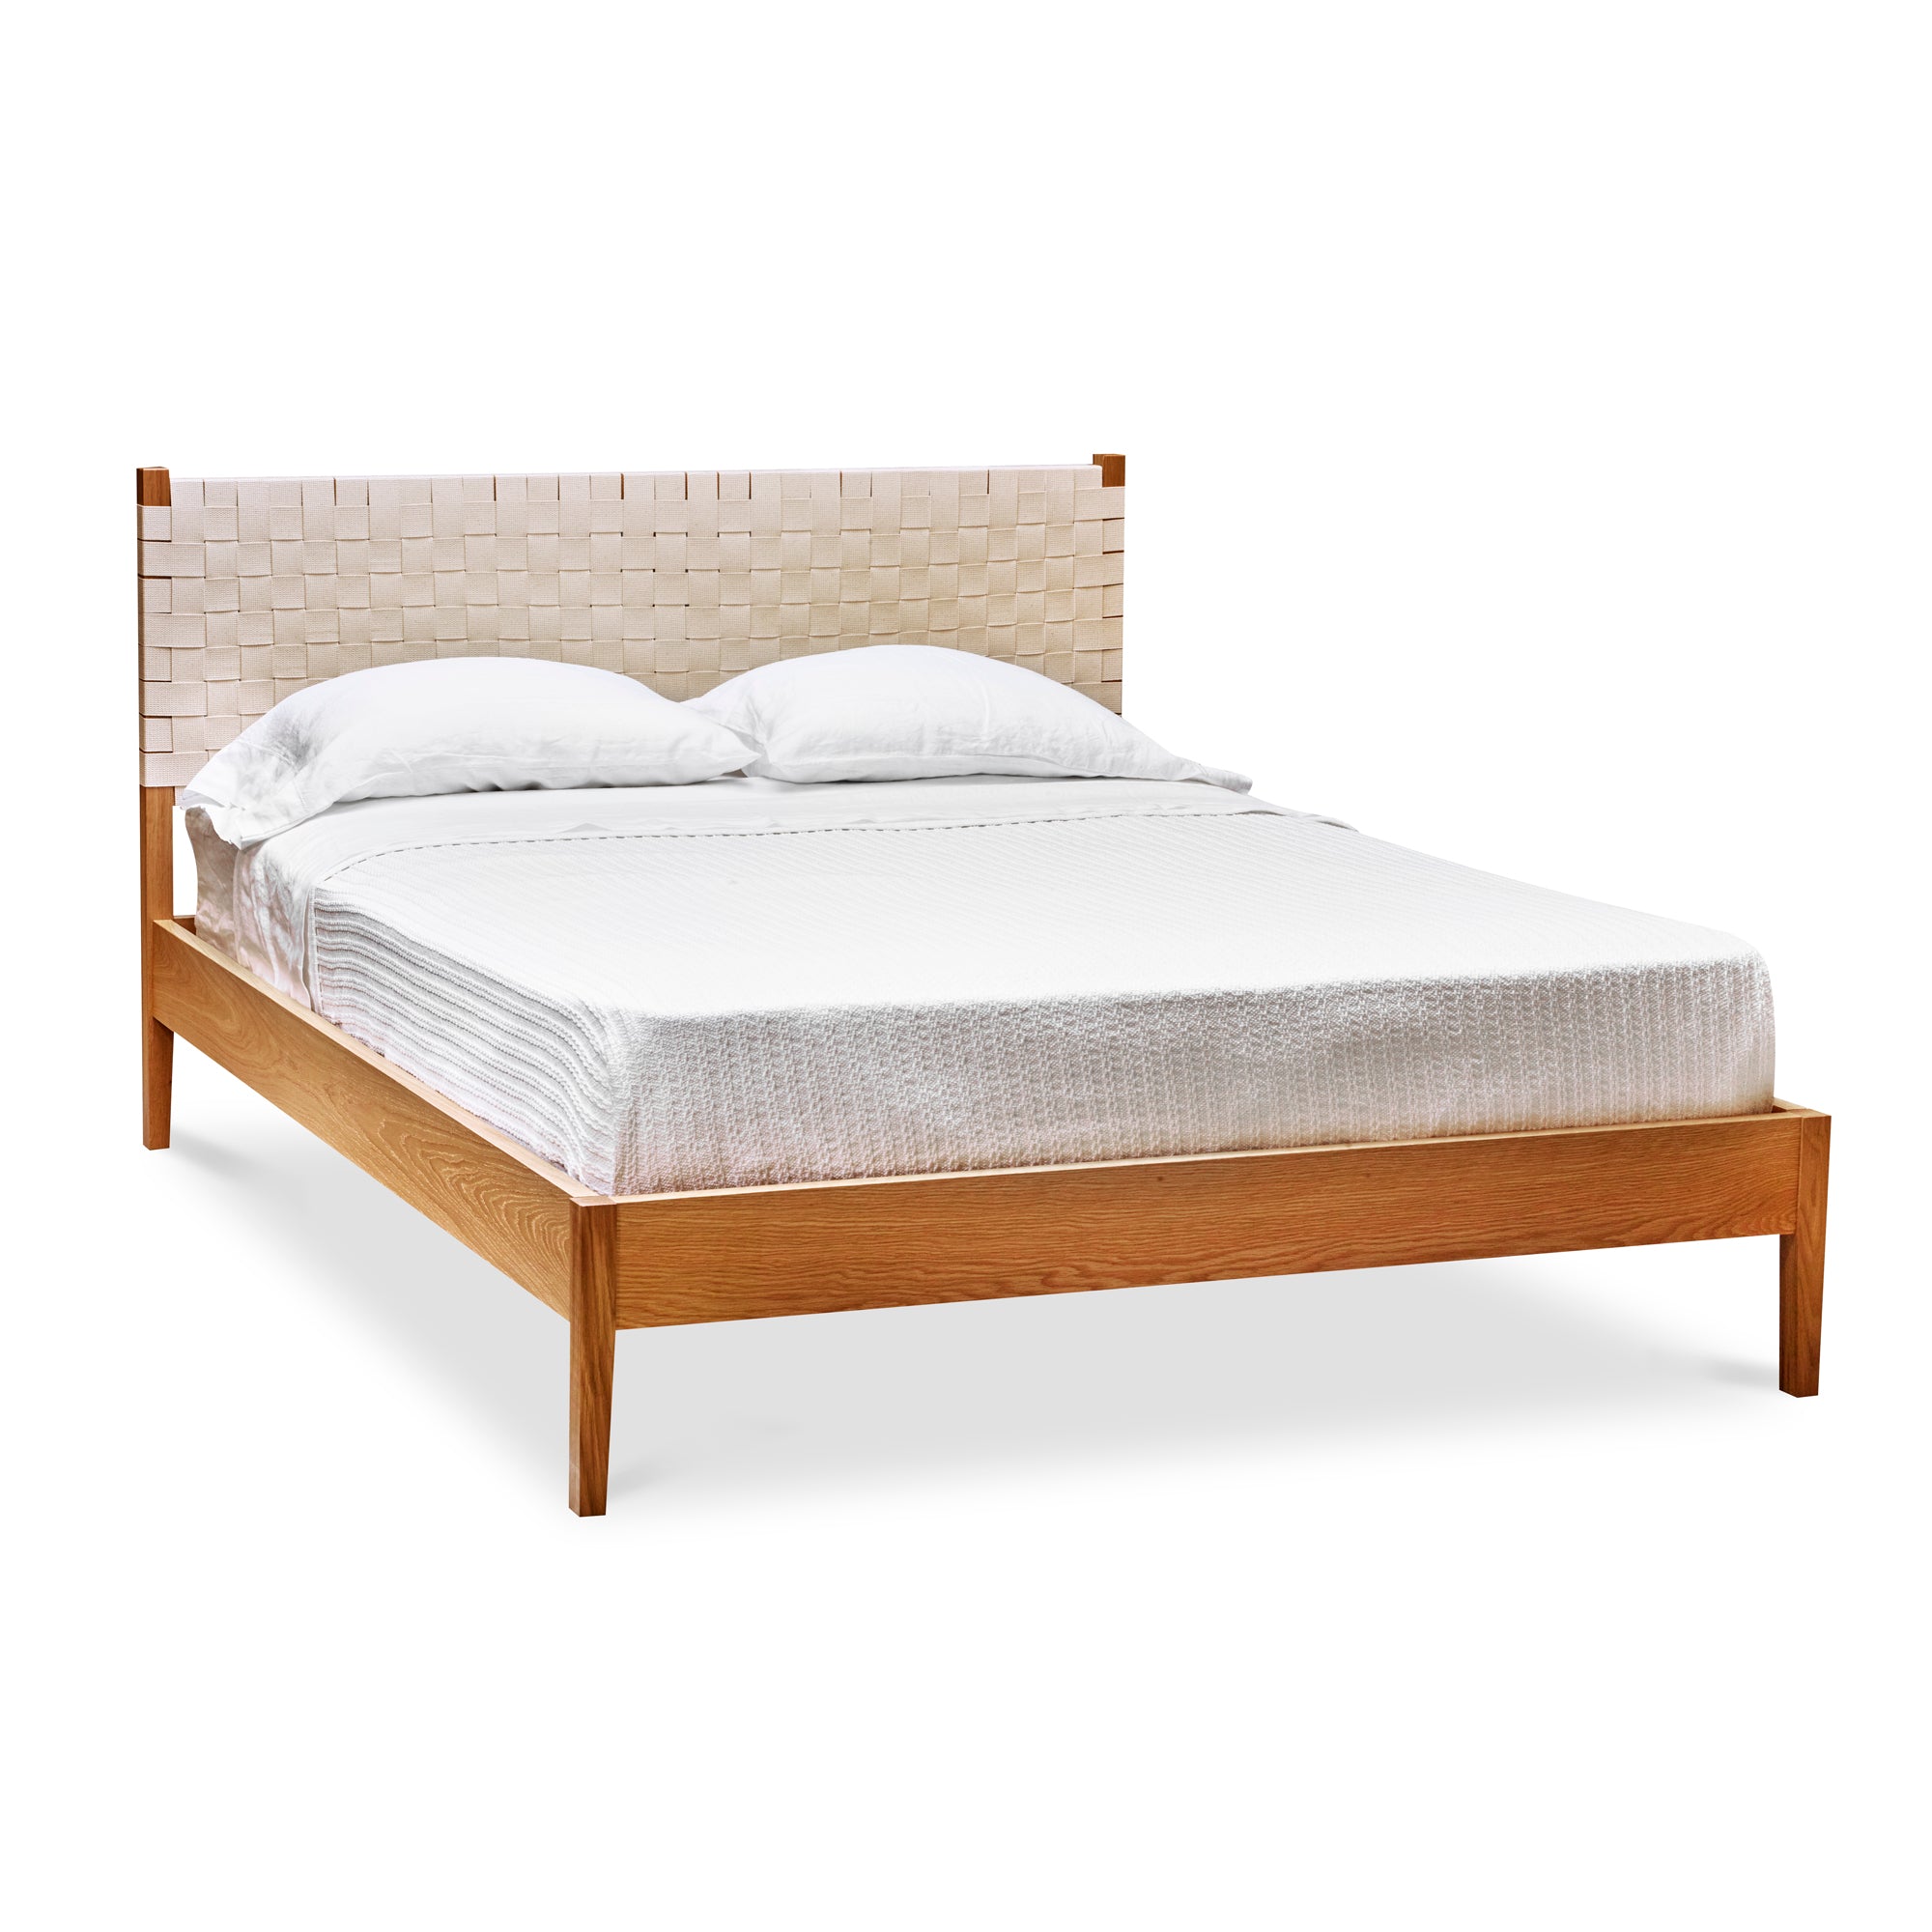 Shaker style bed in white oak wood with woven Shaker tape headboard